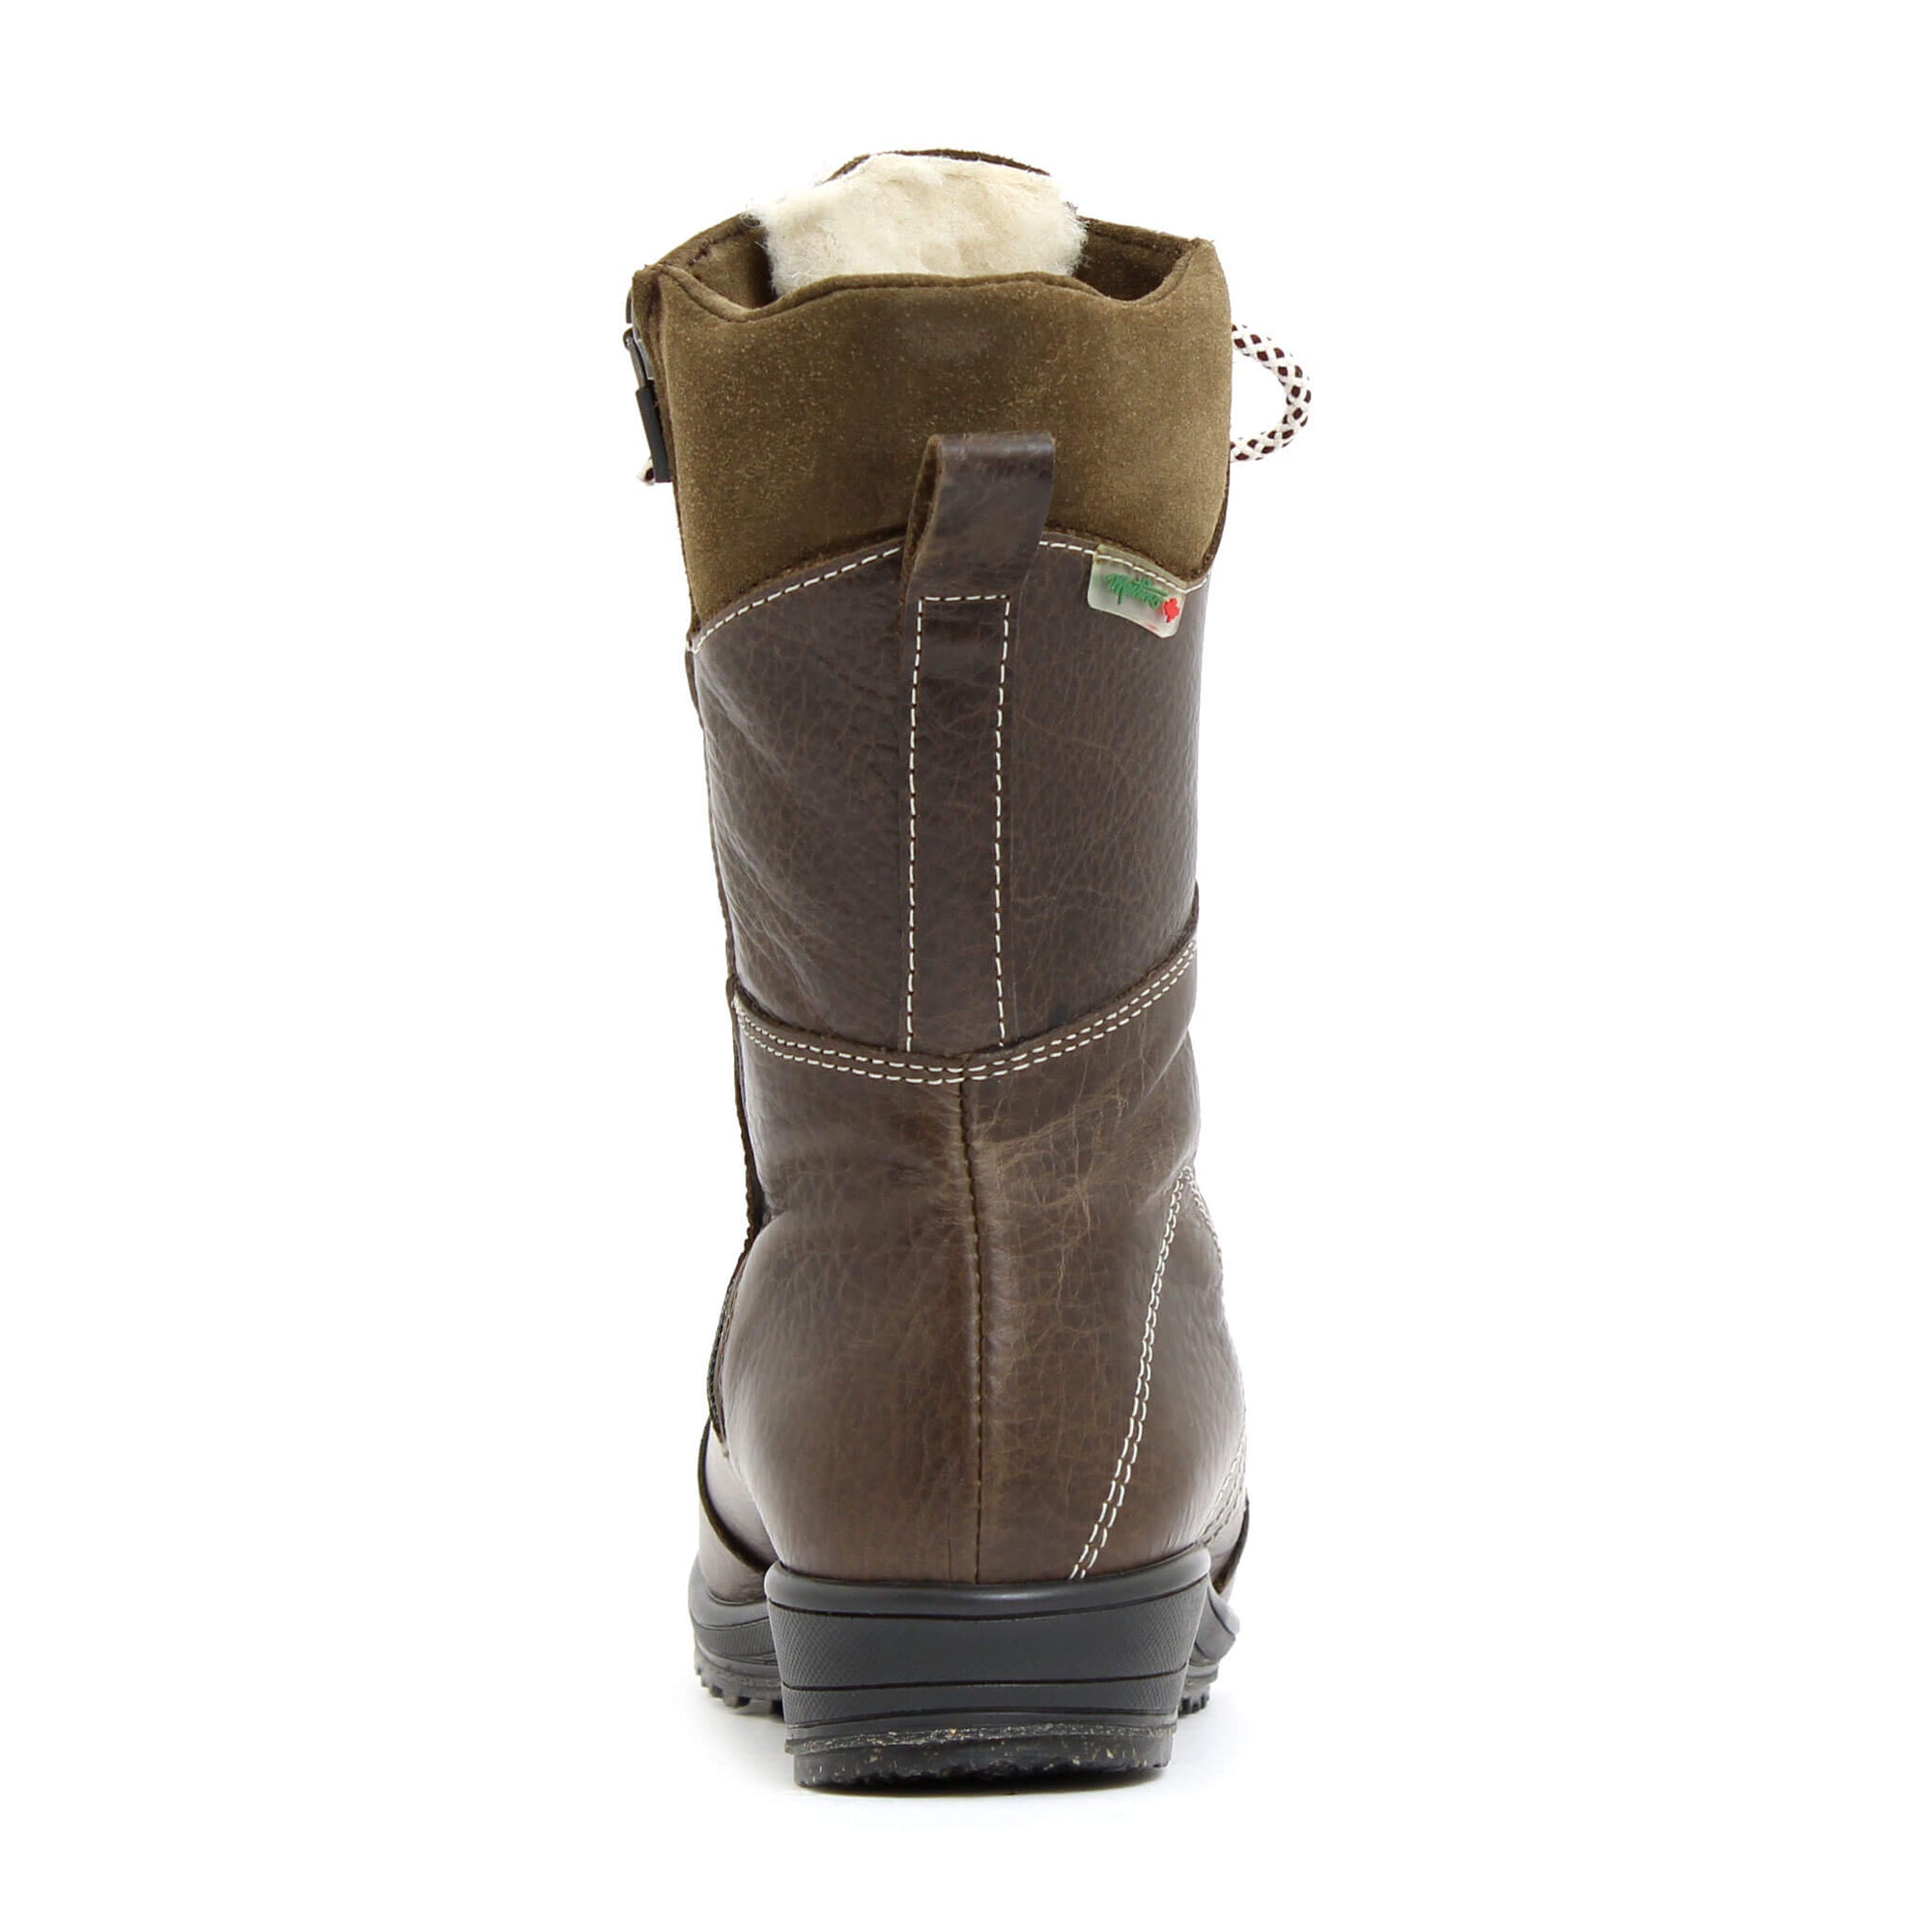 Banff winter boot for women - Black-Mustard